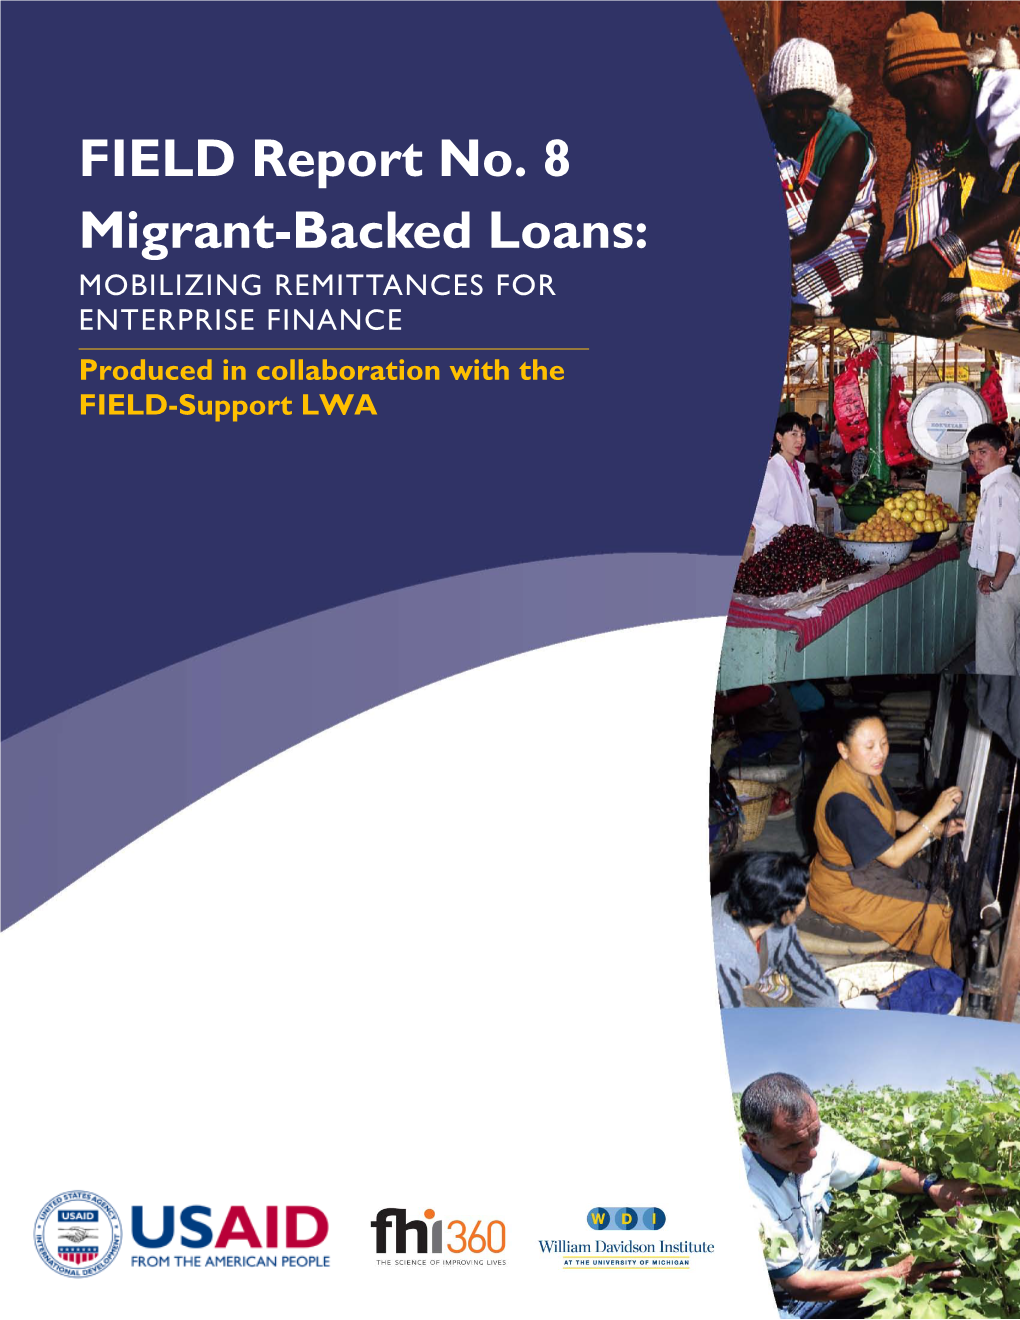 FIELD Report No. 8 Migrant-Backed Loans: MOBILIZING REMITTANCES for ENTERPRISE FINANCE